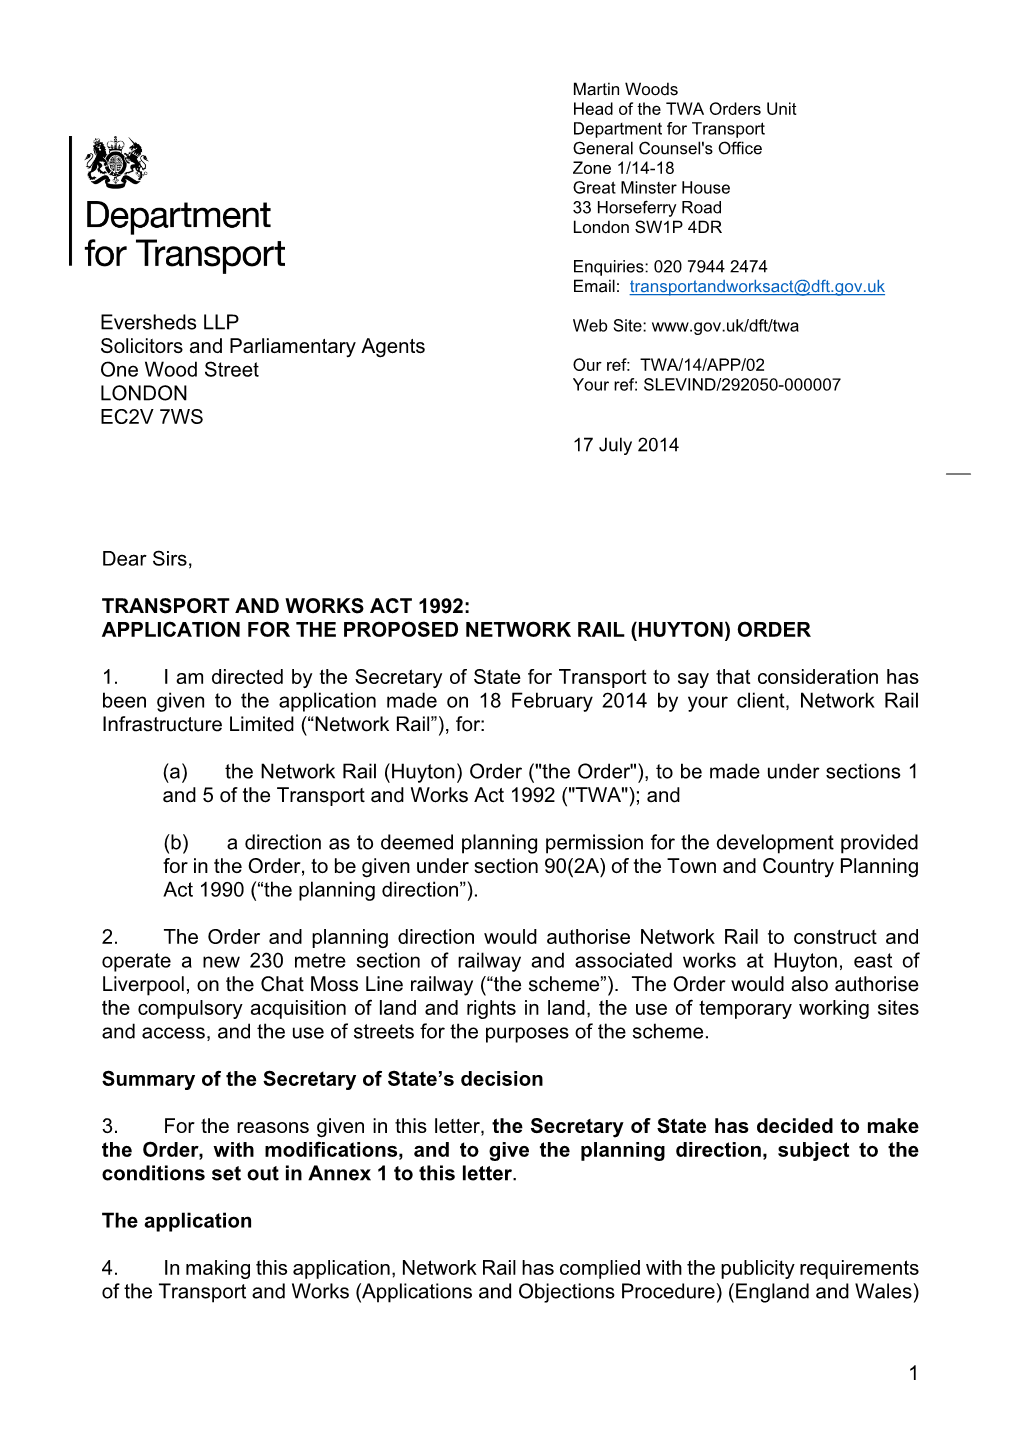 Network Rail (Huyton) Order